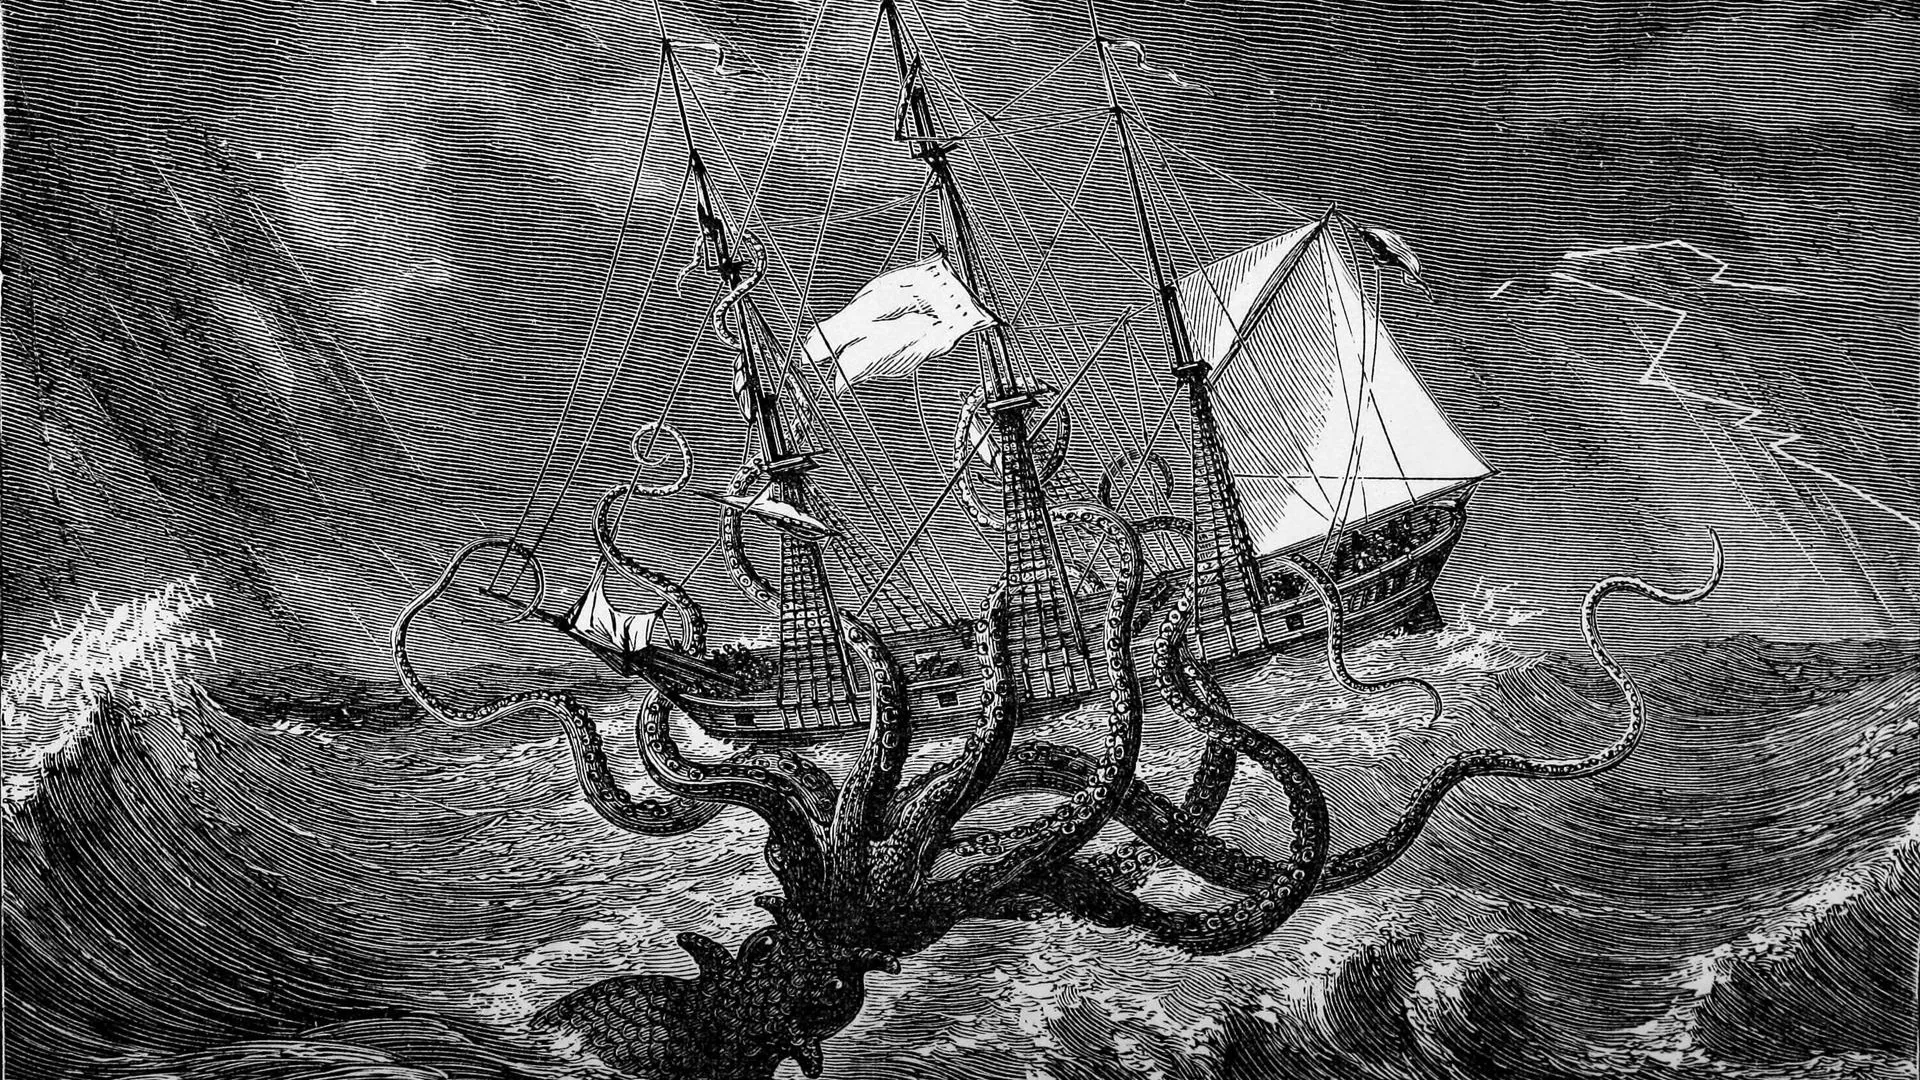 Edgar Etherington. Gibson, J. (1887). Monsters of the Sea: Legendary and Authentic. Thomas Nelson and Sons, London. p. 83, Общественное достояние